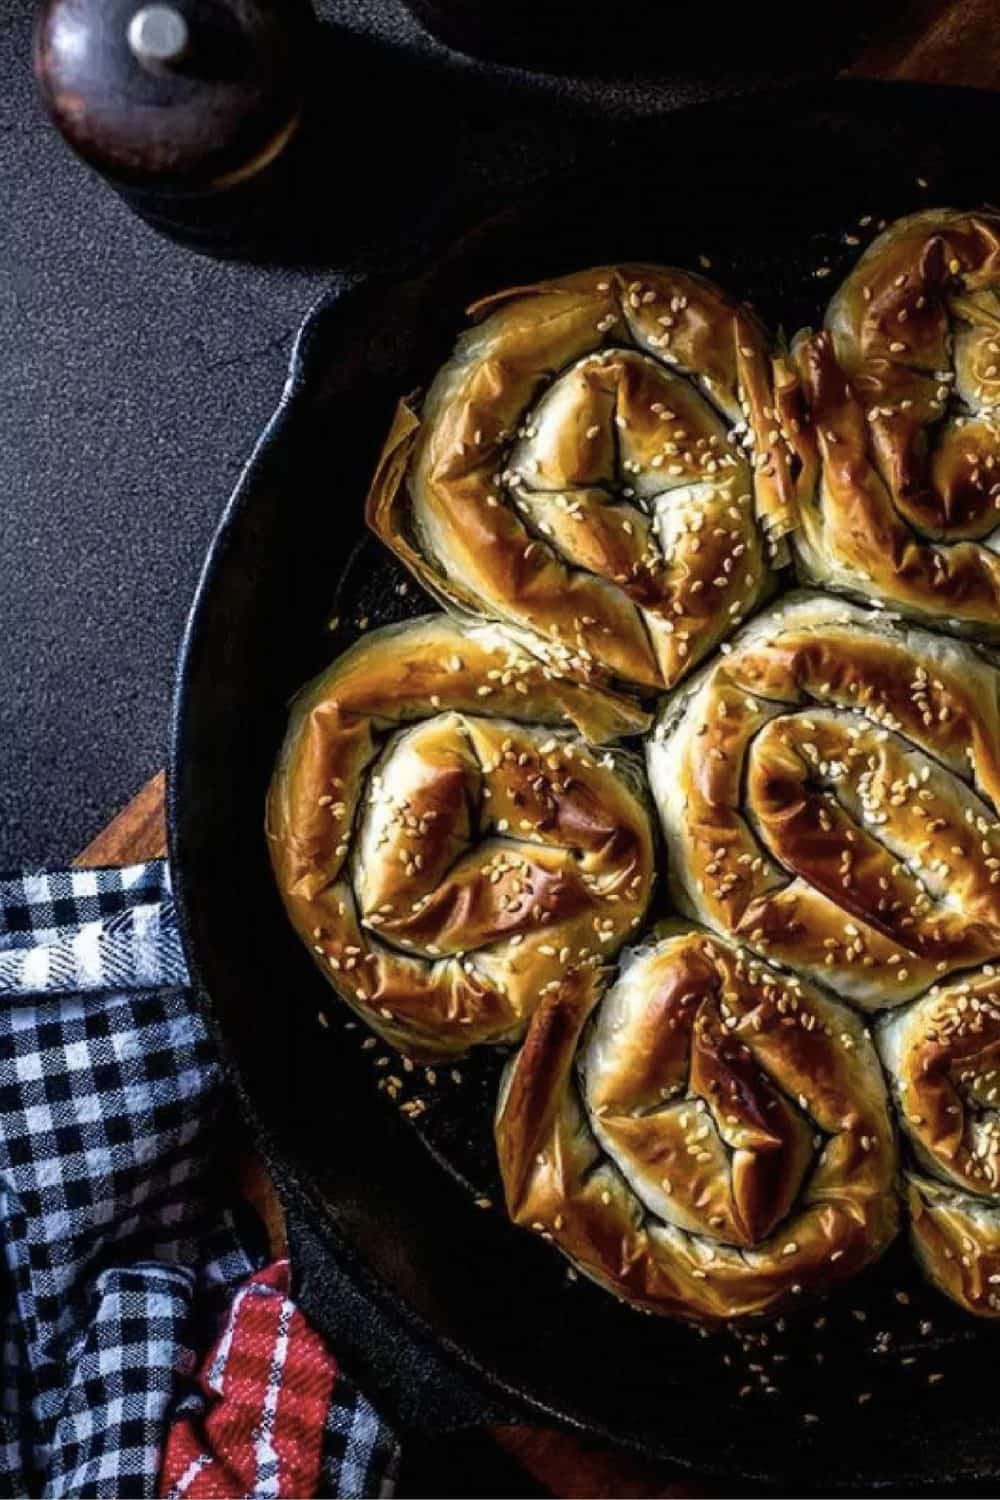 Pita baked rolls